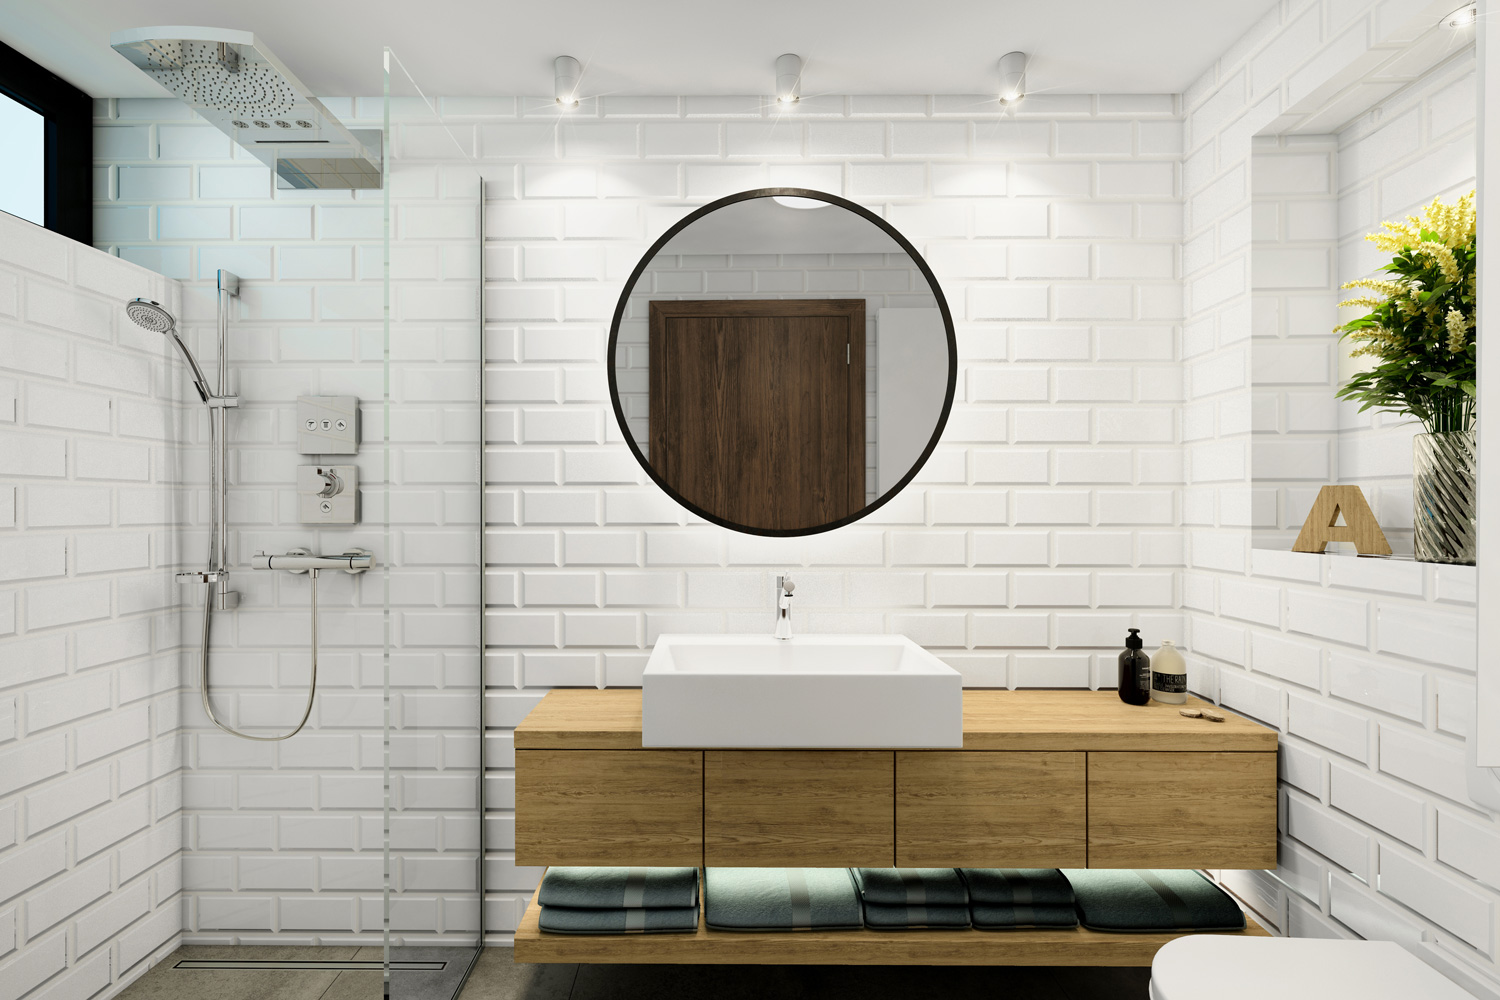 Modern Scandinavian style bathroom. White brick tiles, circle mirror, wood. lots of decorative light